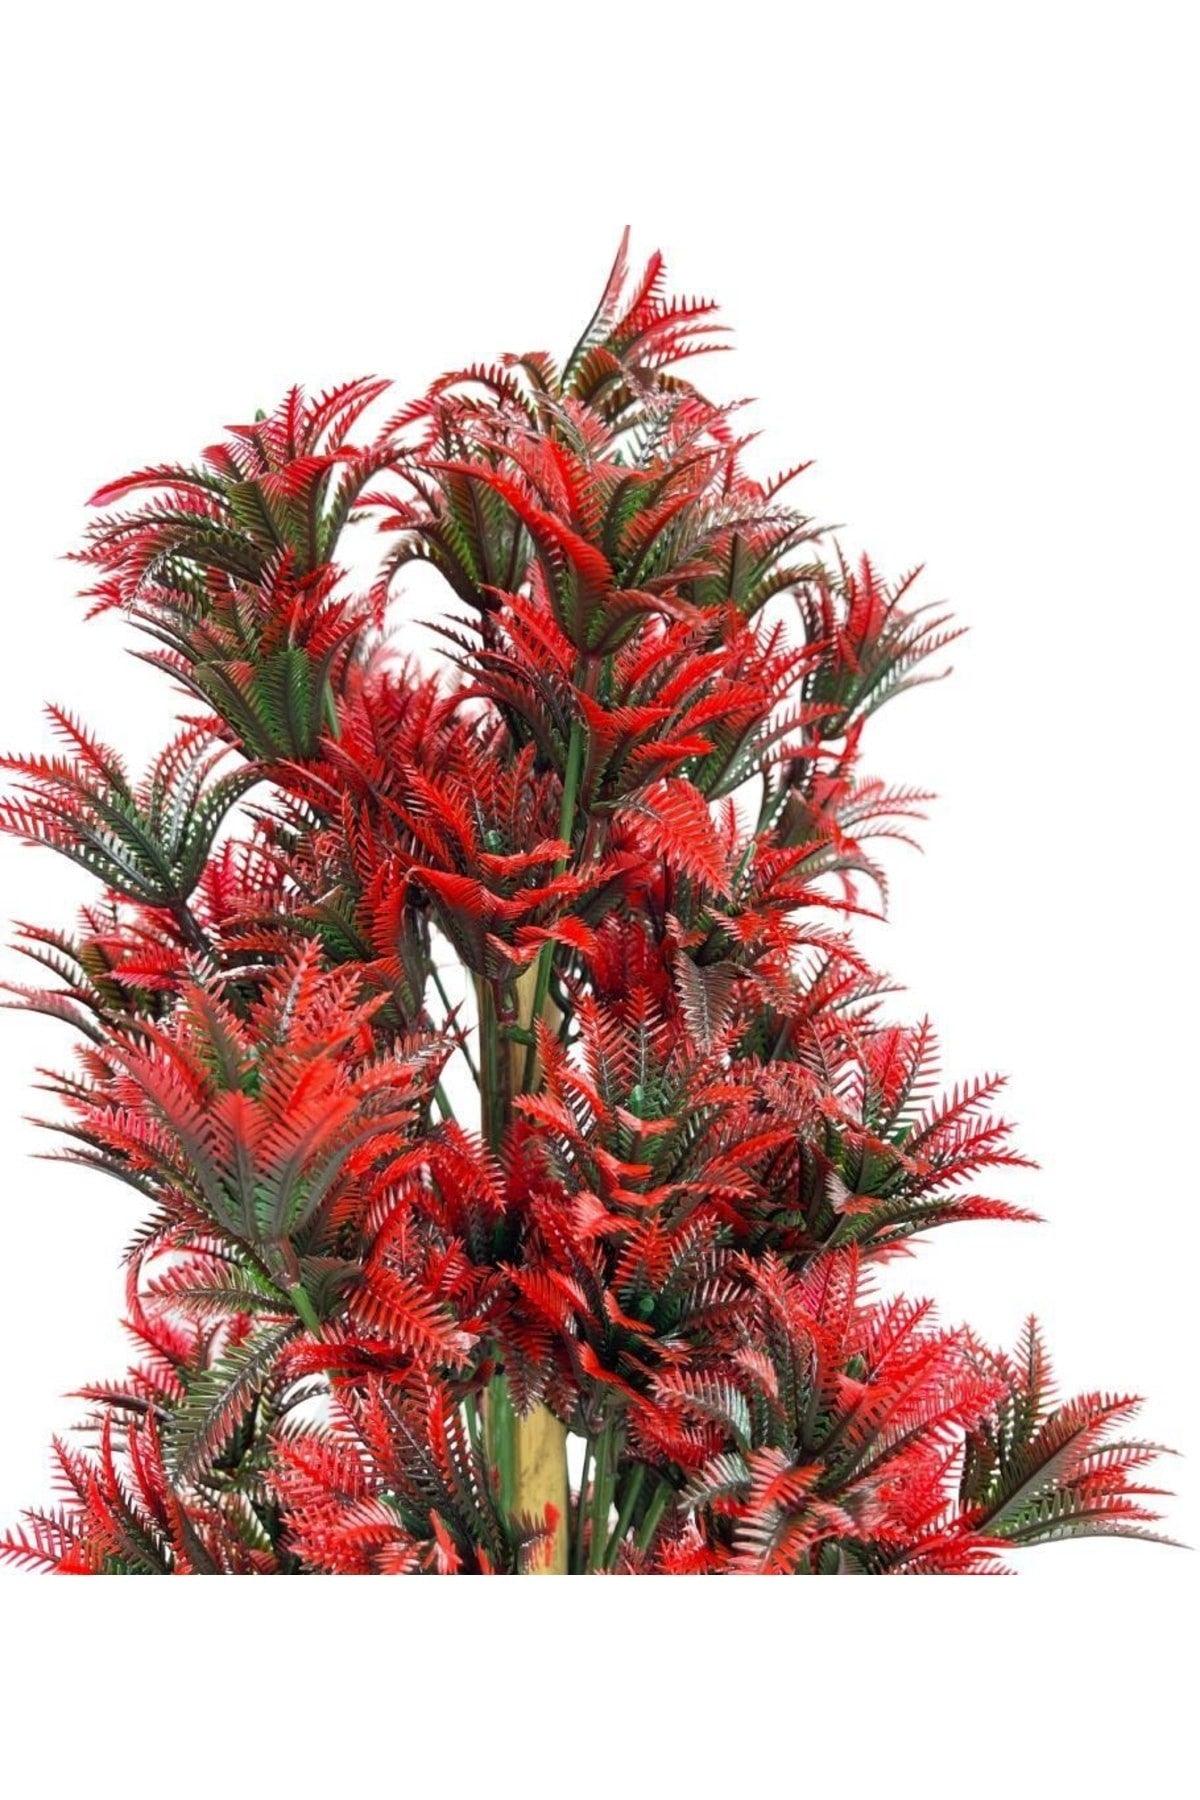 Artificial Flower Black Potted Red Jams Tree 55cm - Swordslife